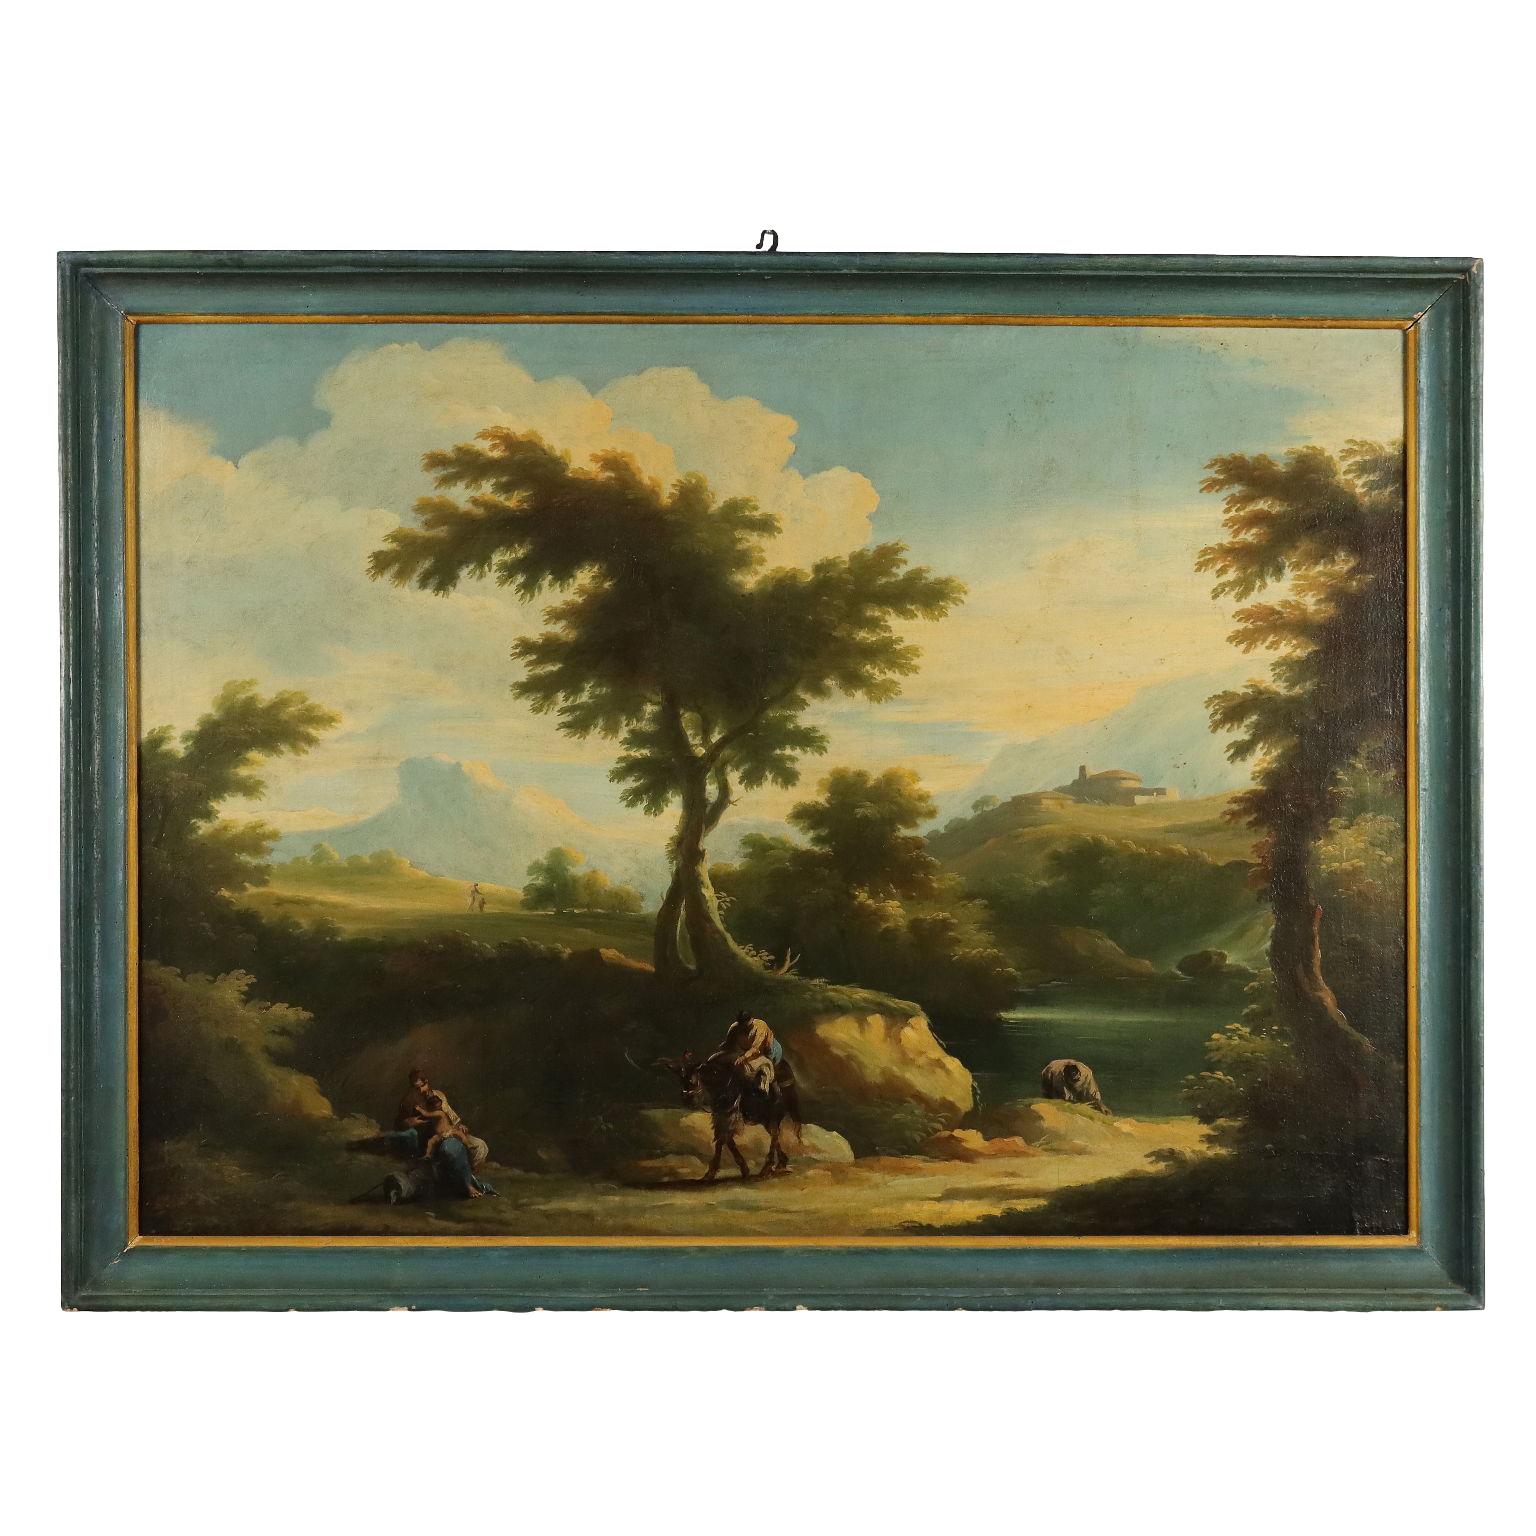 Unknown Landscape Painting - Dipinto Paesaggio con Lavandaie al Fiume XVIII-XIX secolo